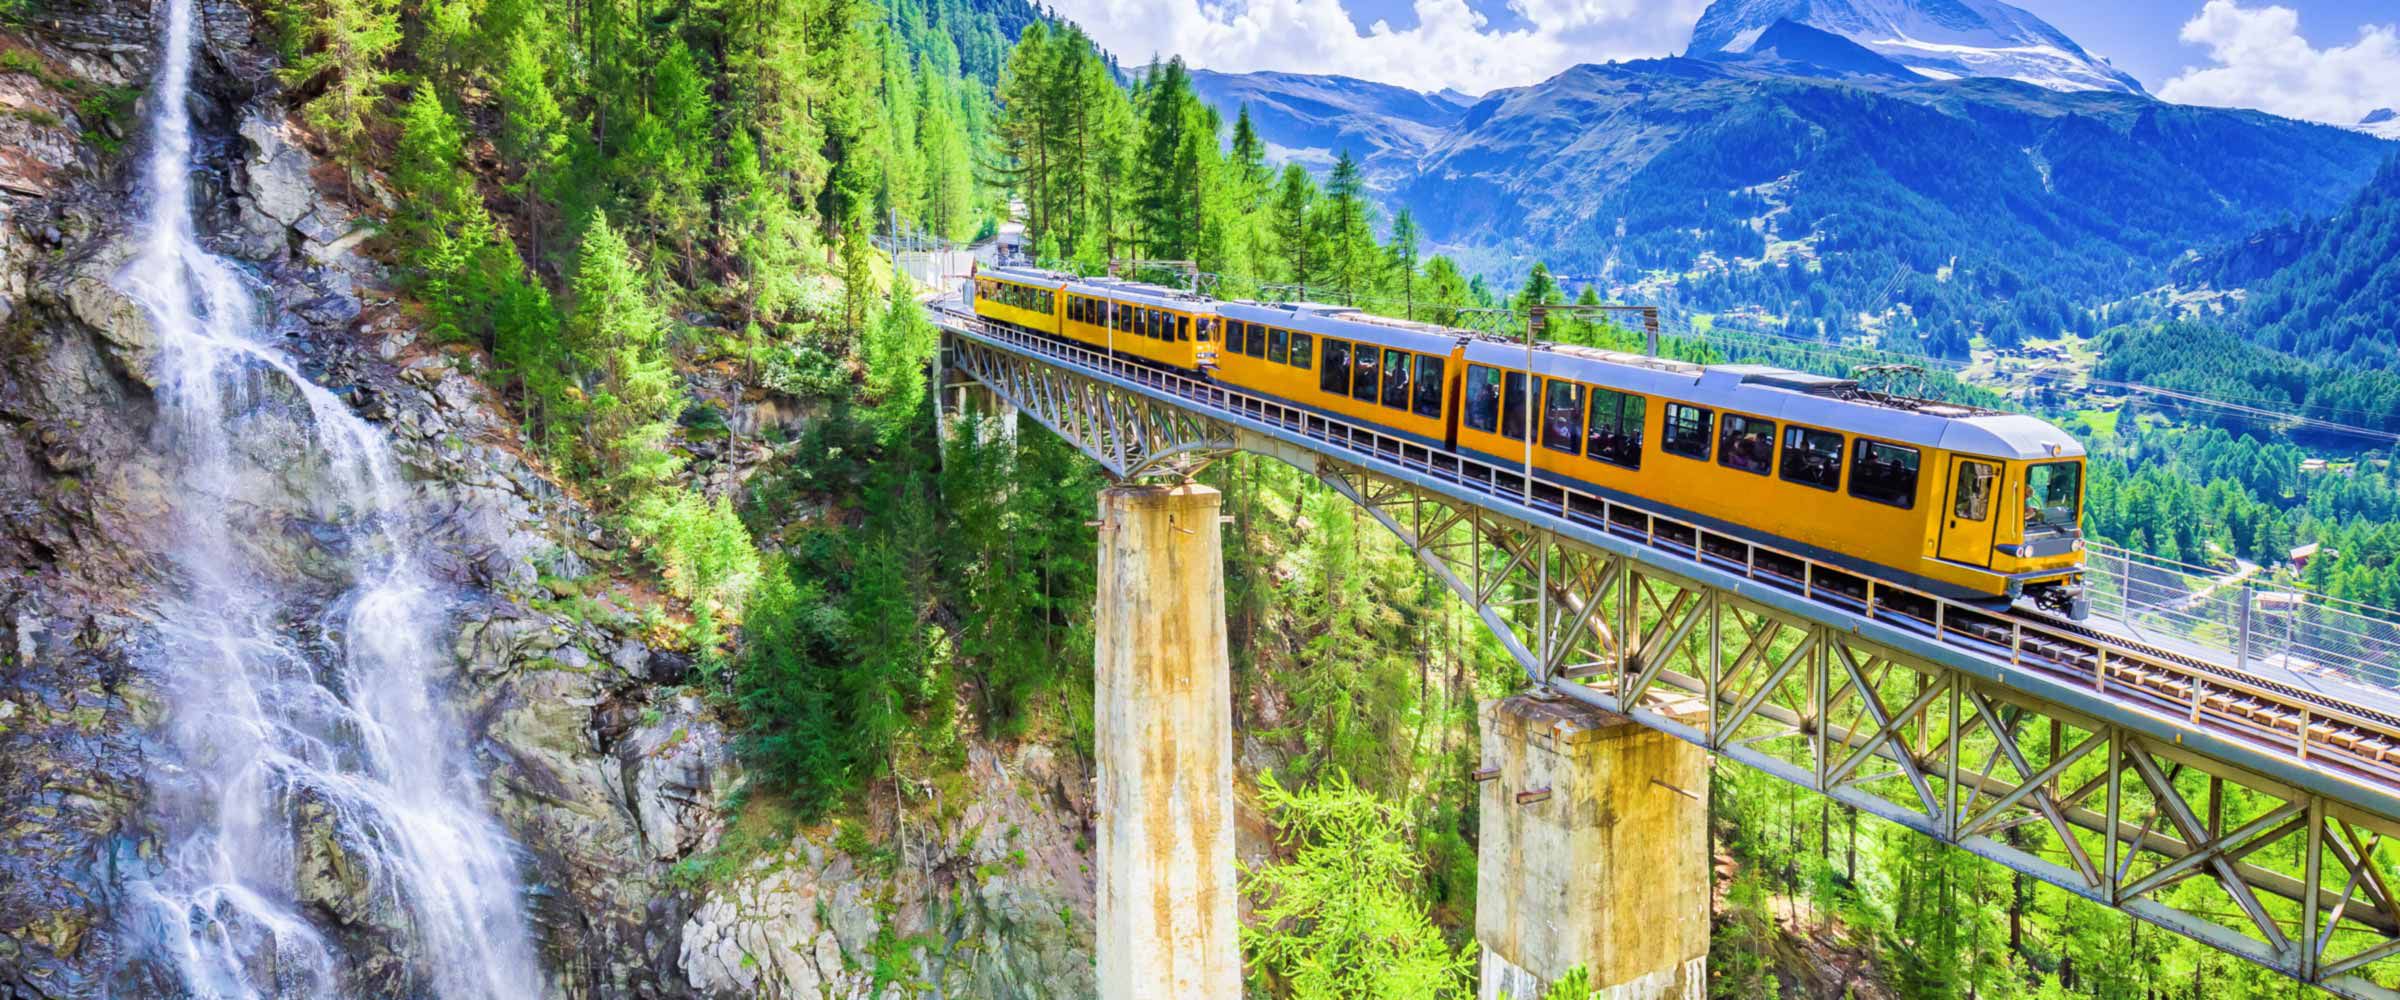 swiss alpine train